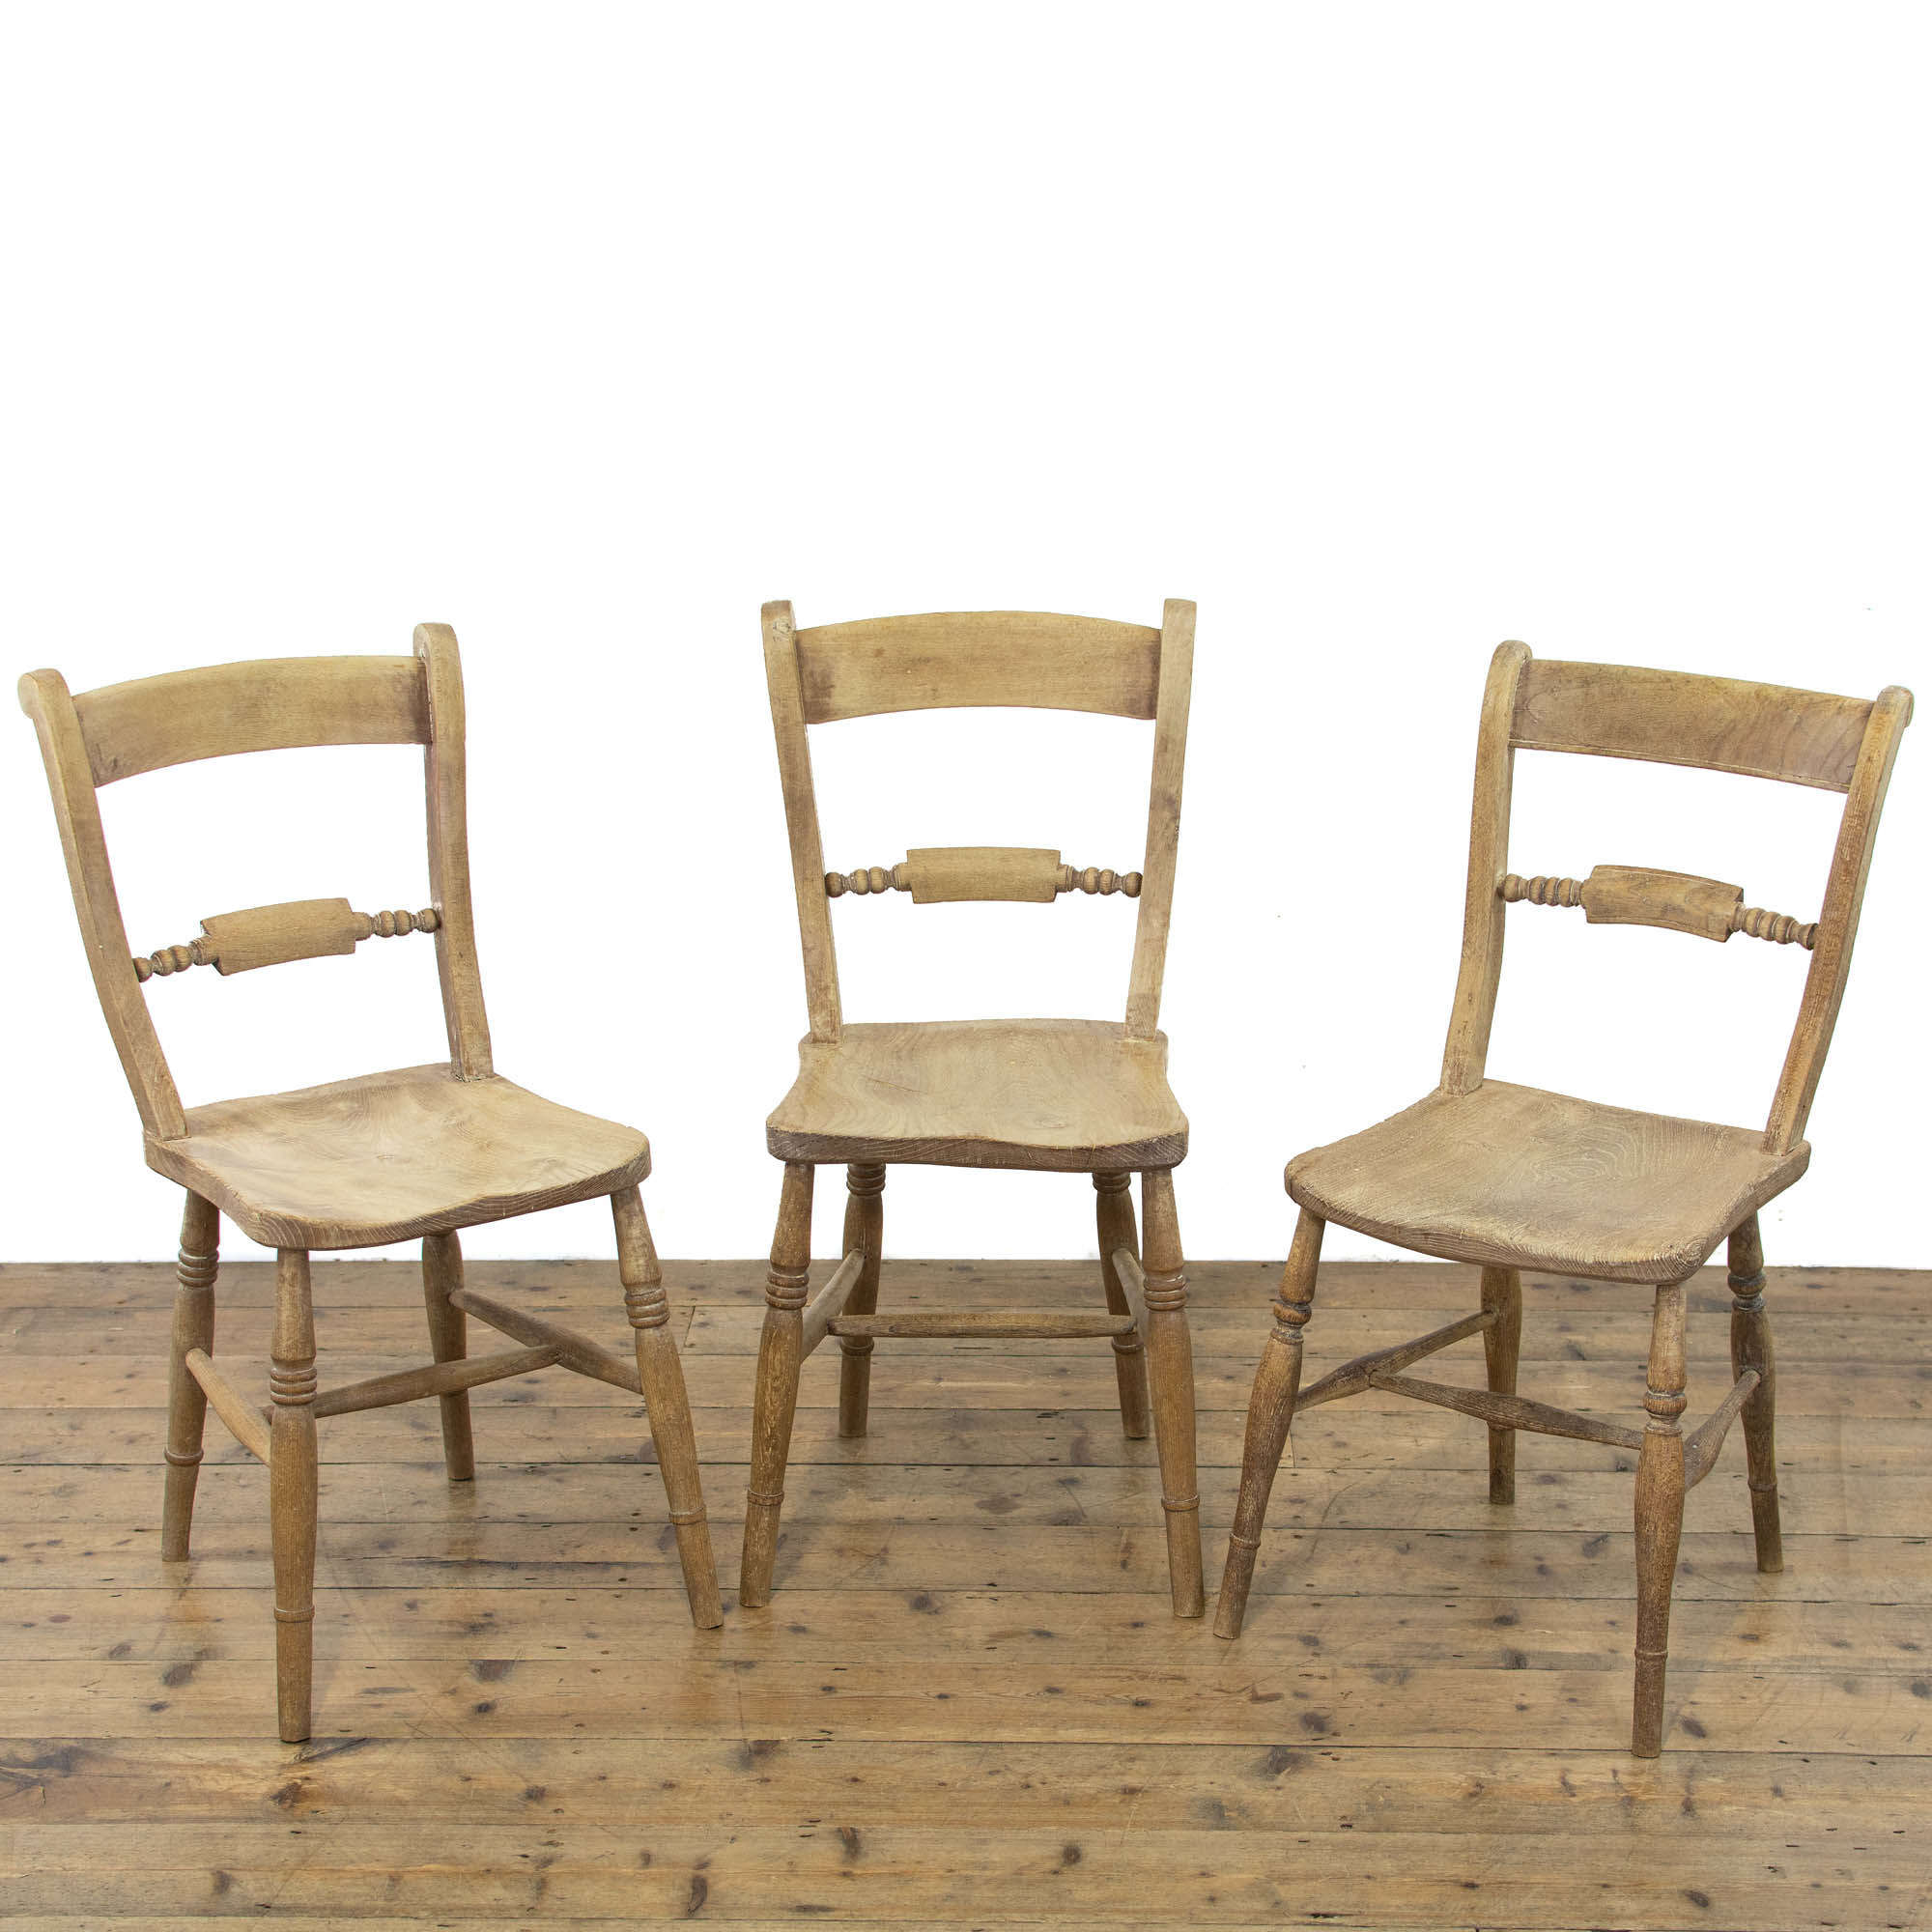 Set of Three Rustic Pine Farmhouse Kitchen Chairs